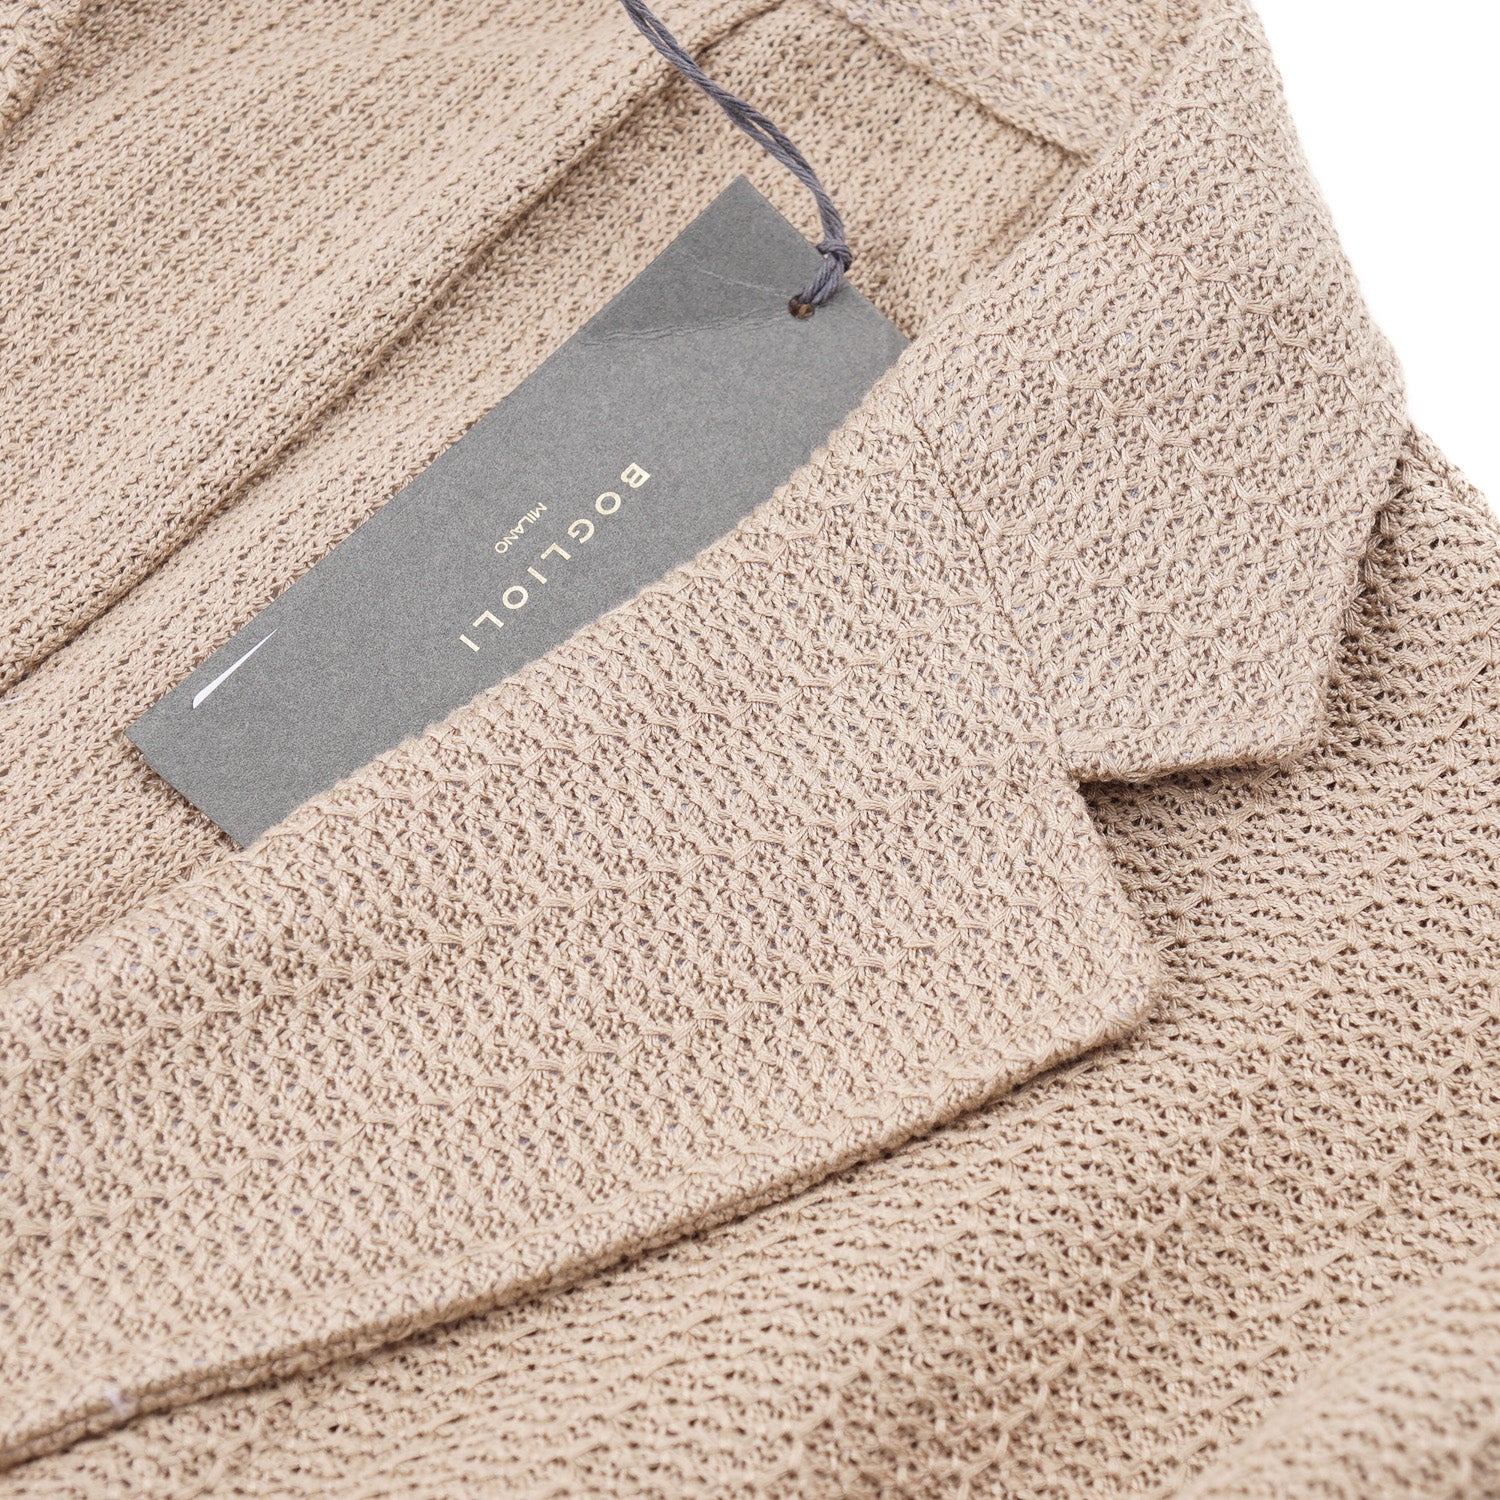 Boglioli Unlined Knit Cotton Blazer - Top Shelf Apparel